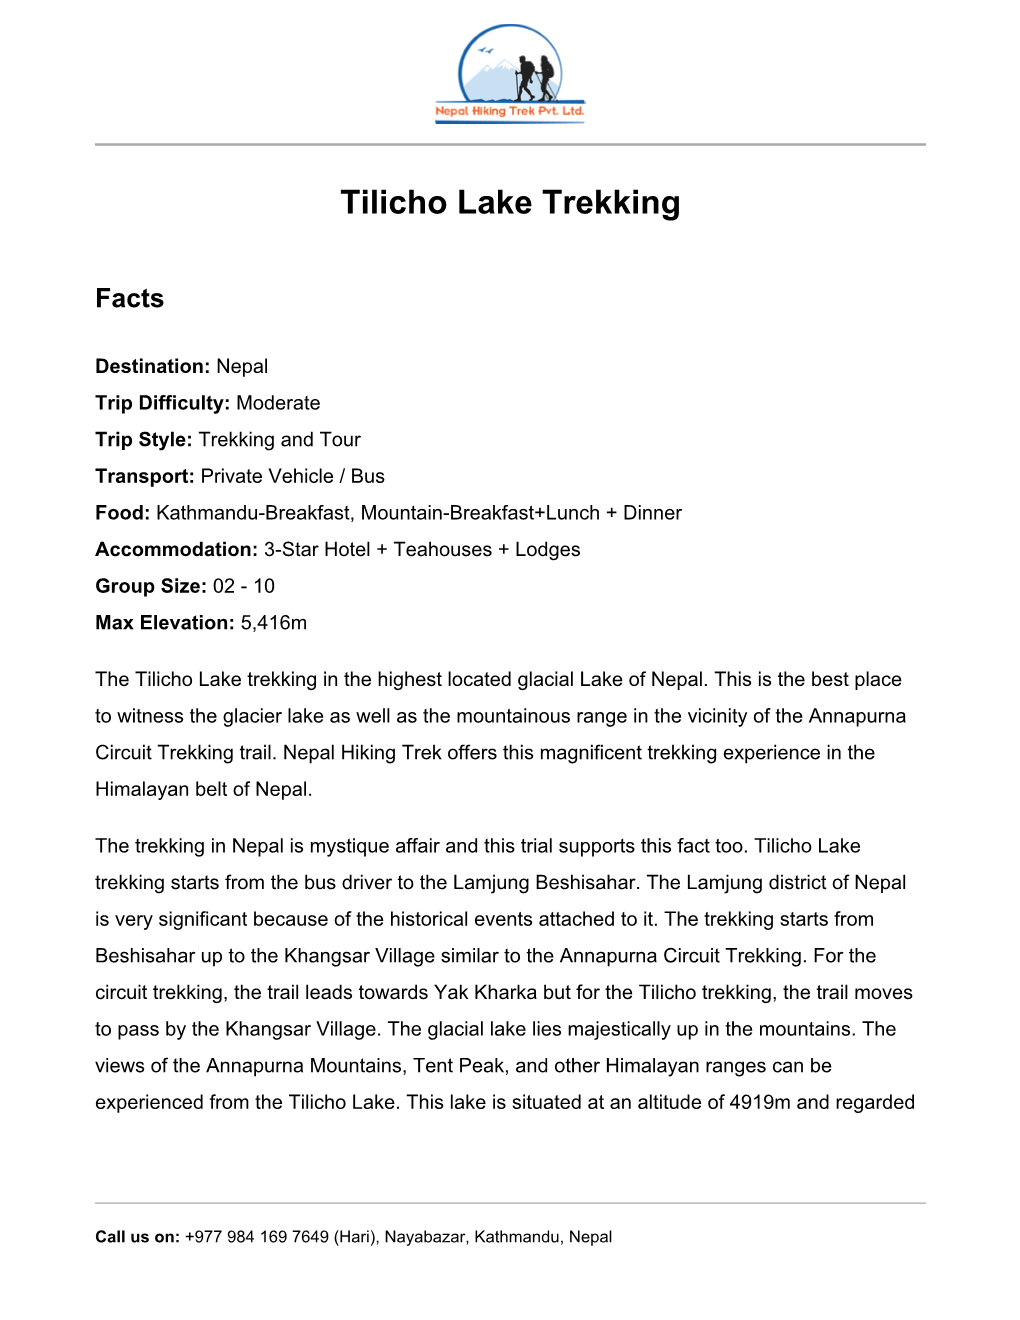 Tilicho Lake Trekking